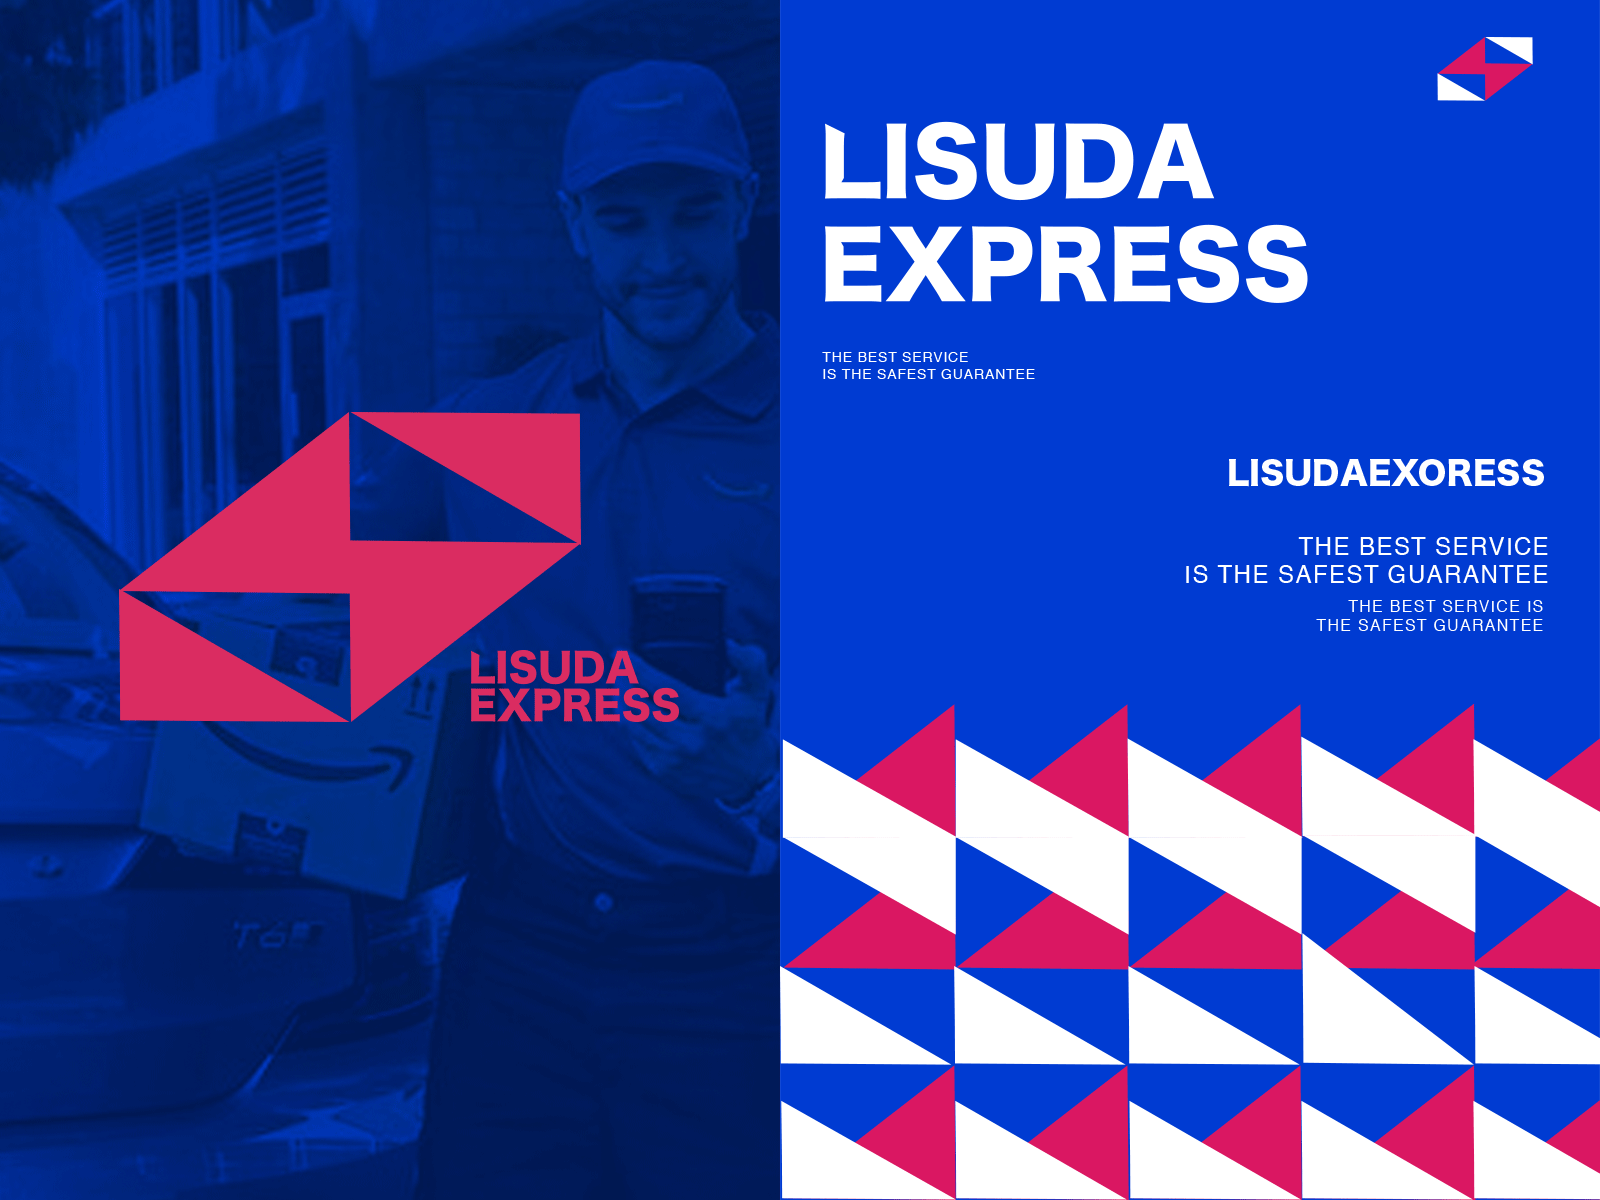 lisuda express